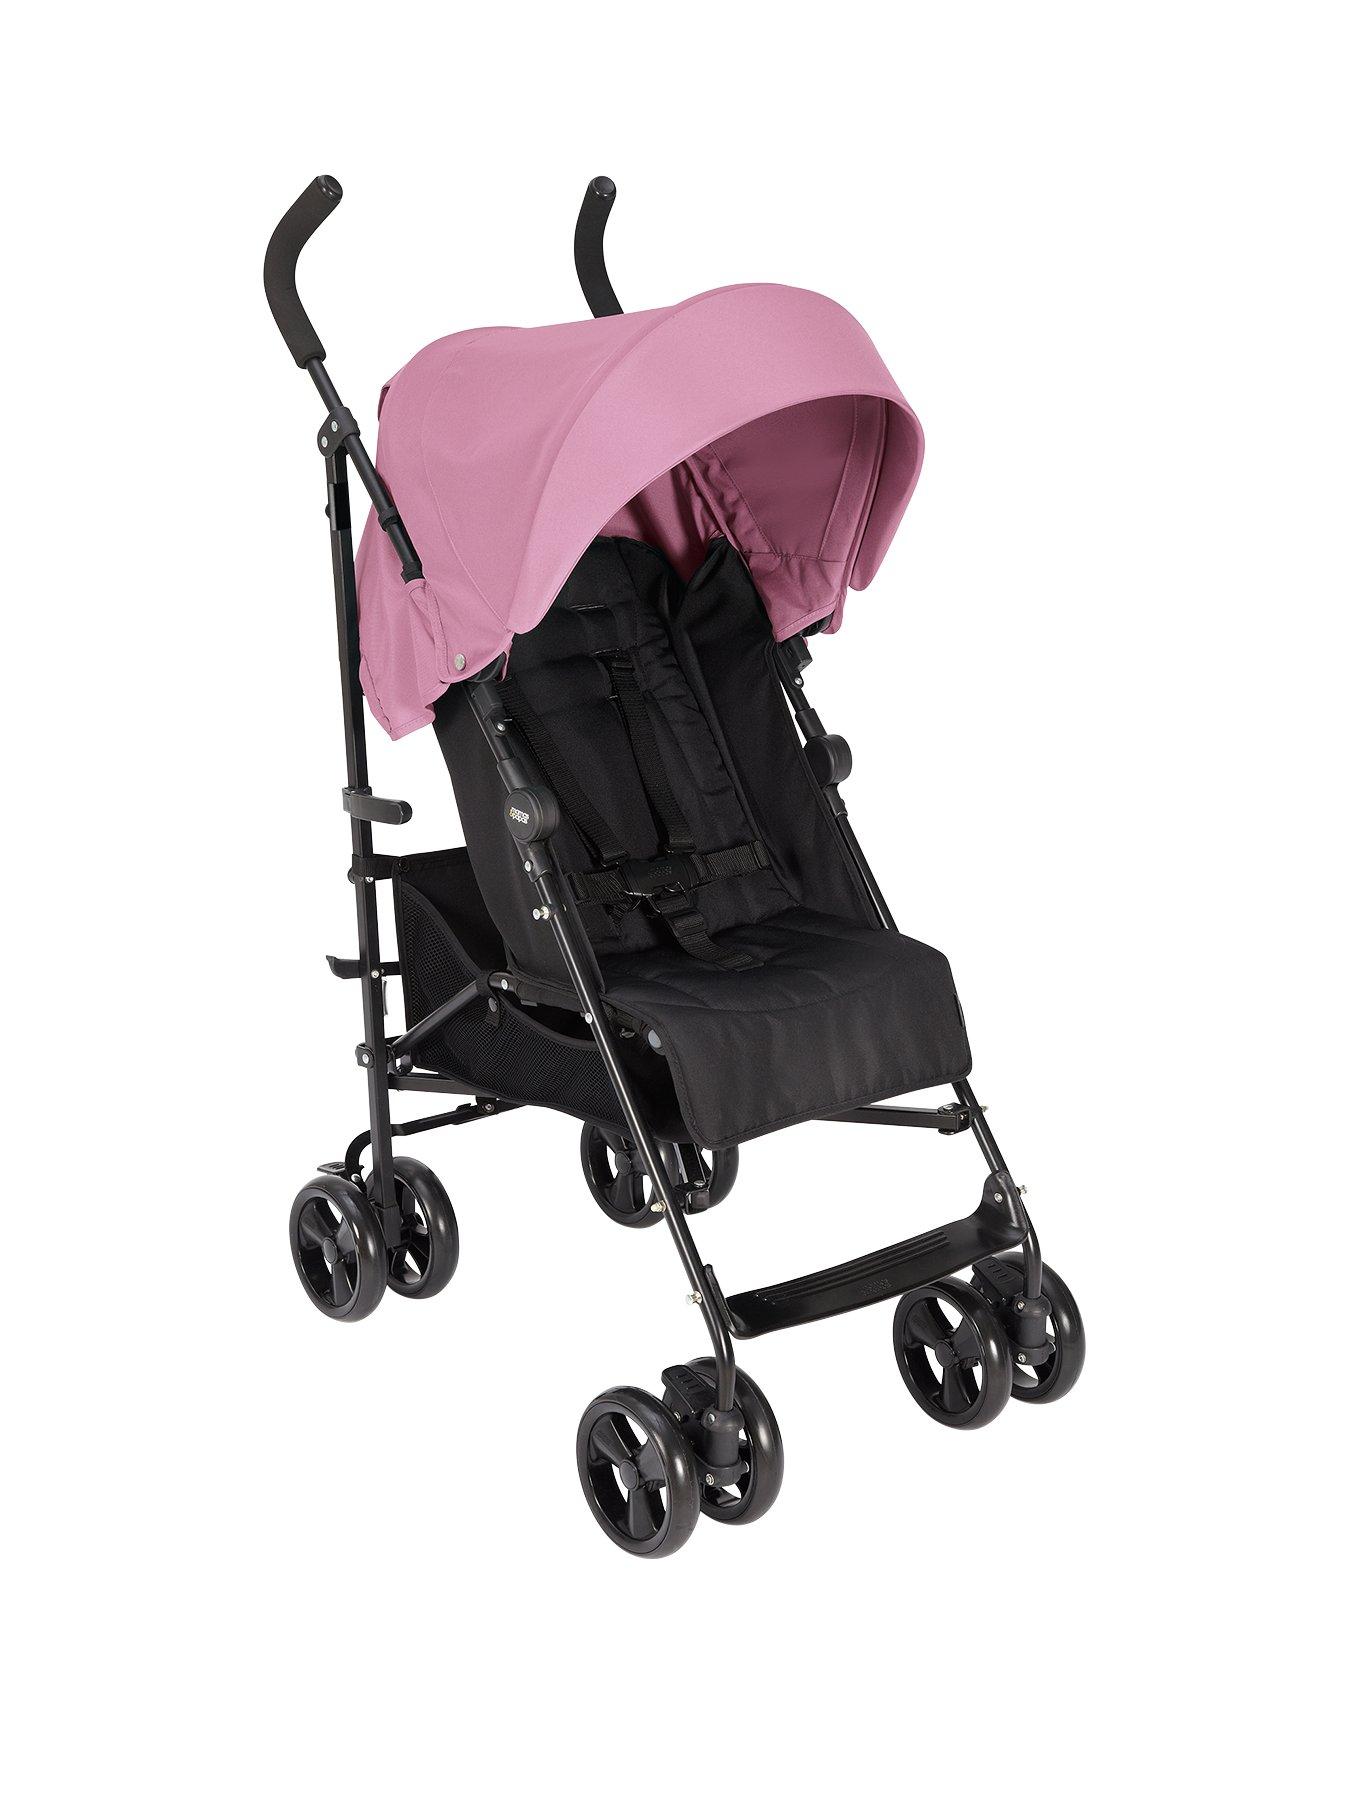 mamas and papas stroller pink